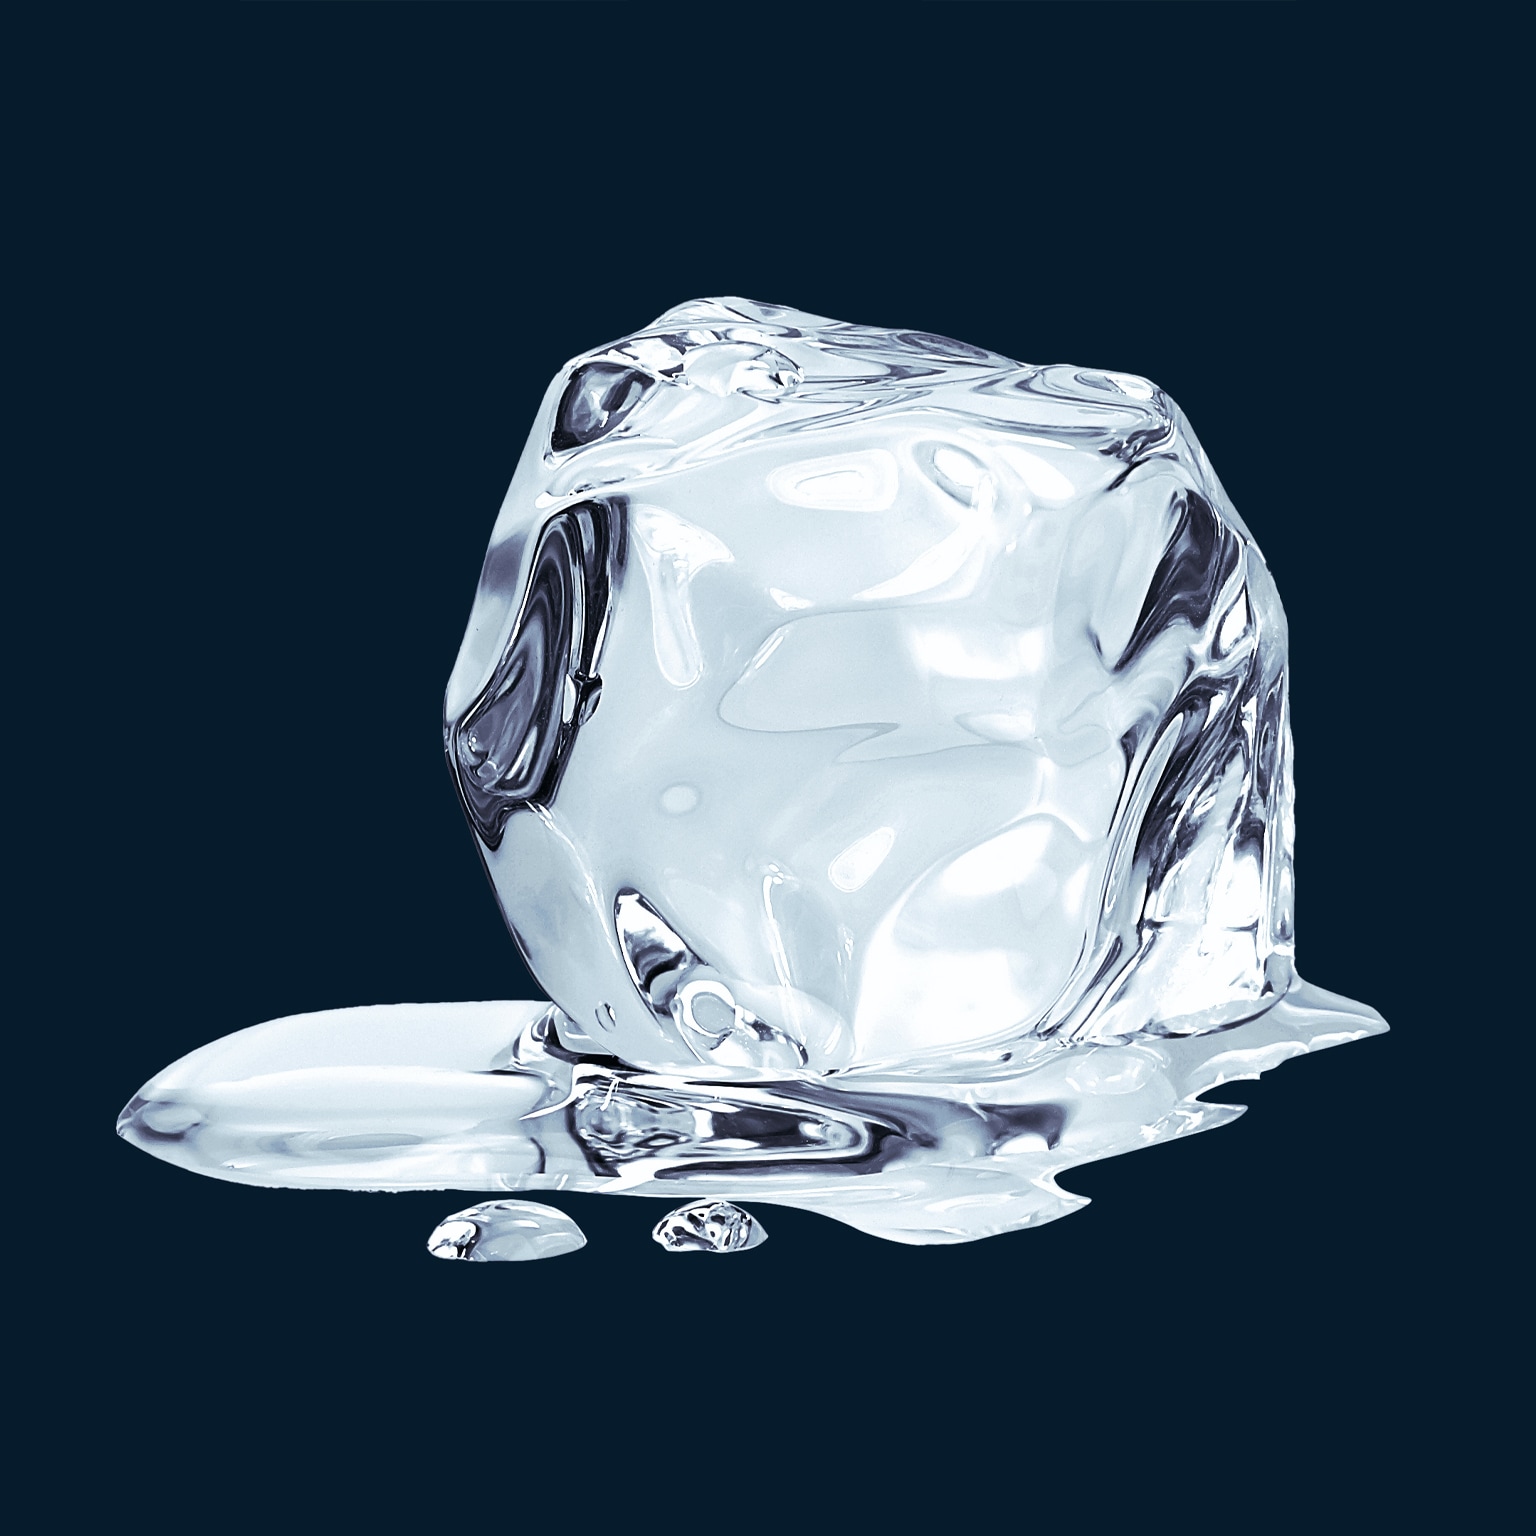 Image of a melting ice cube